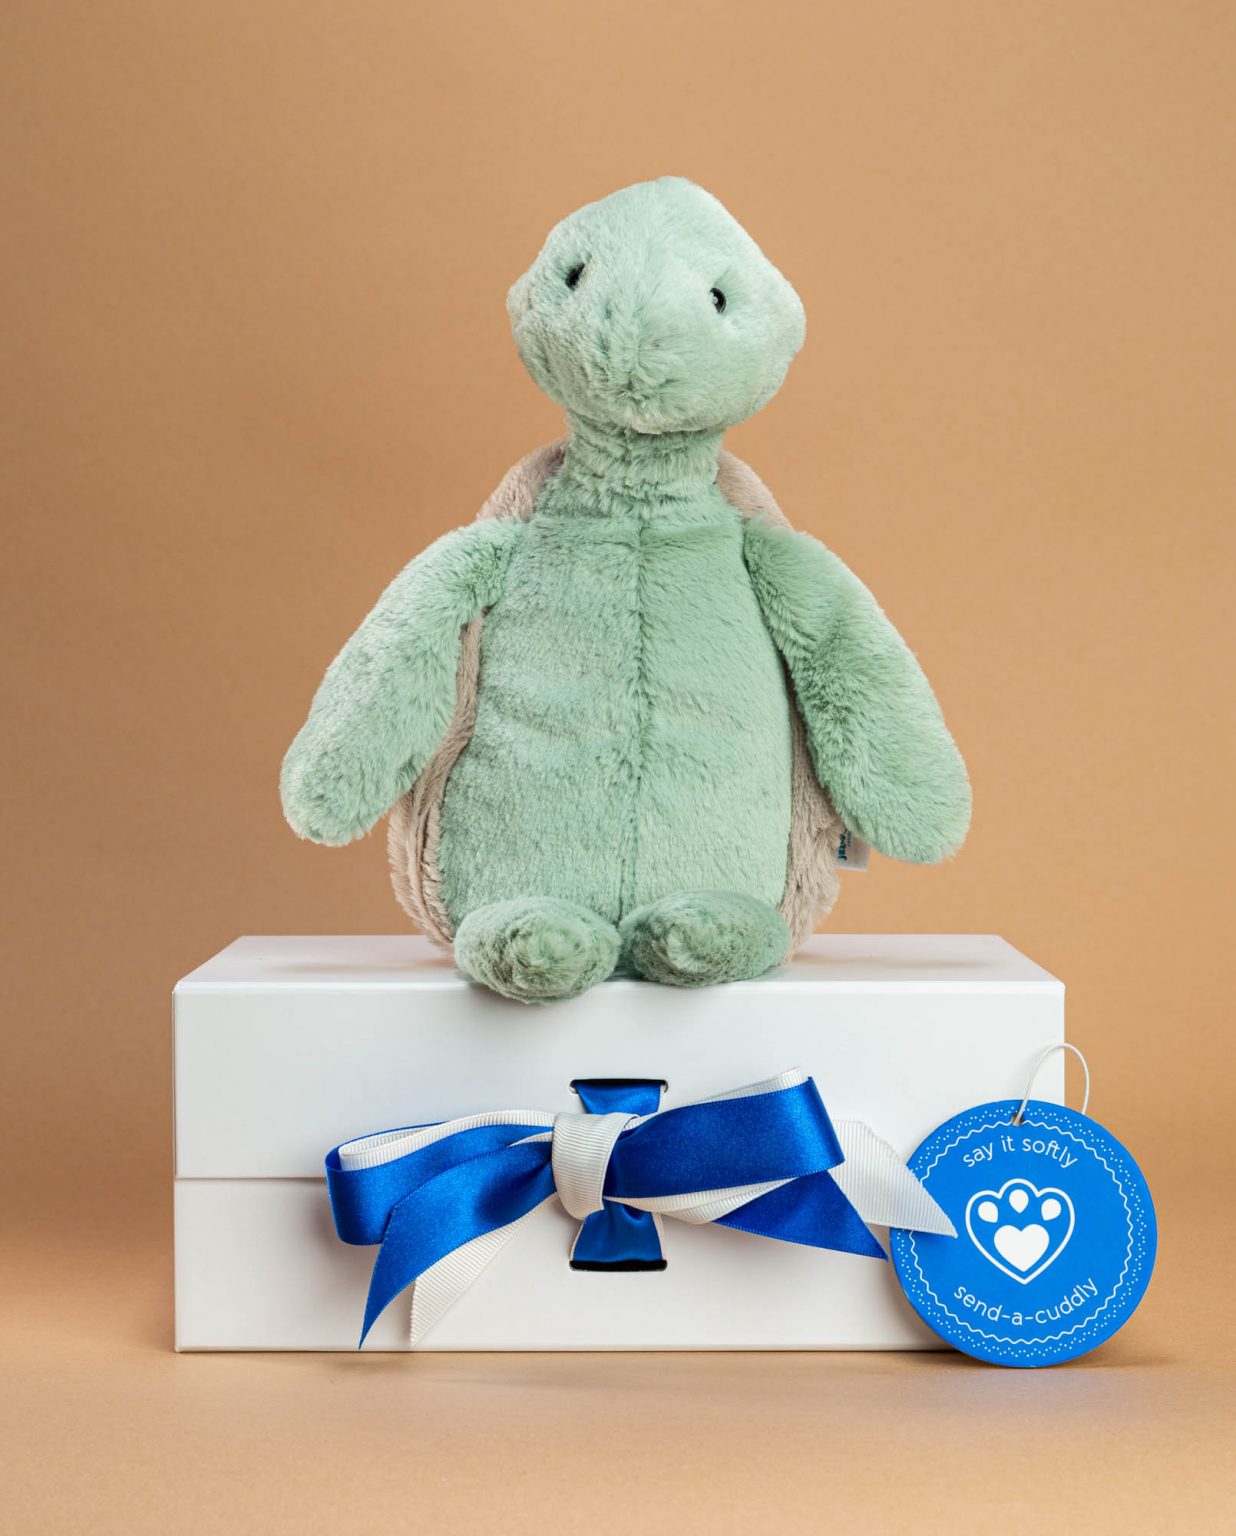 Turtle Soft toy gift - Send a Cuddly